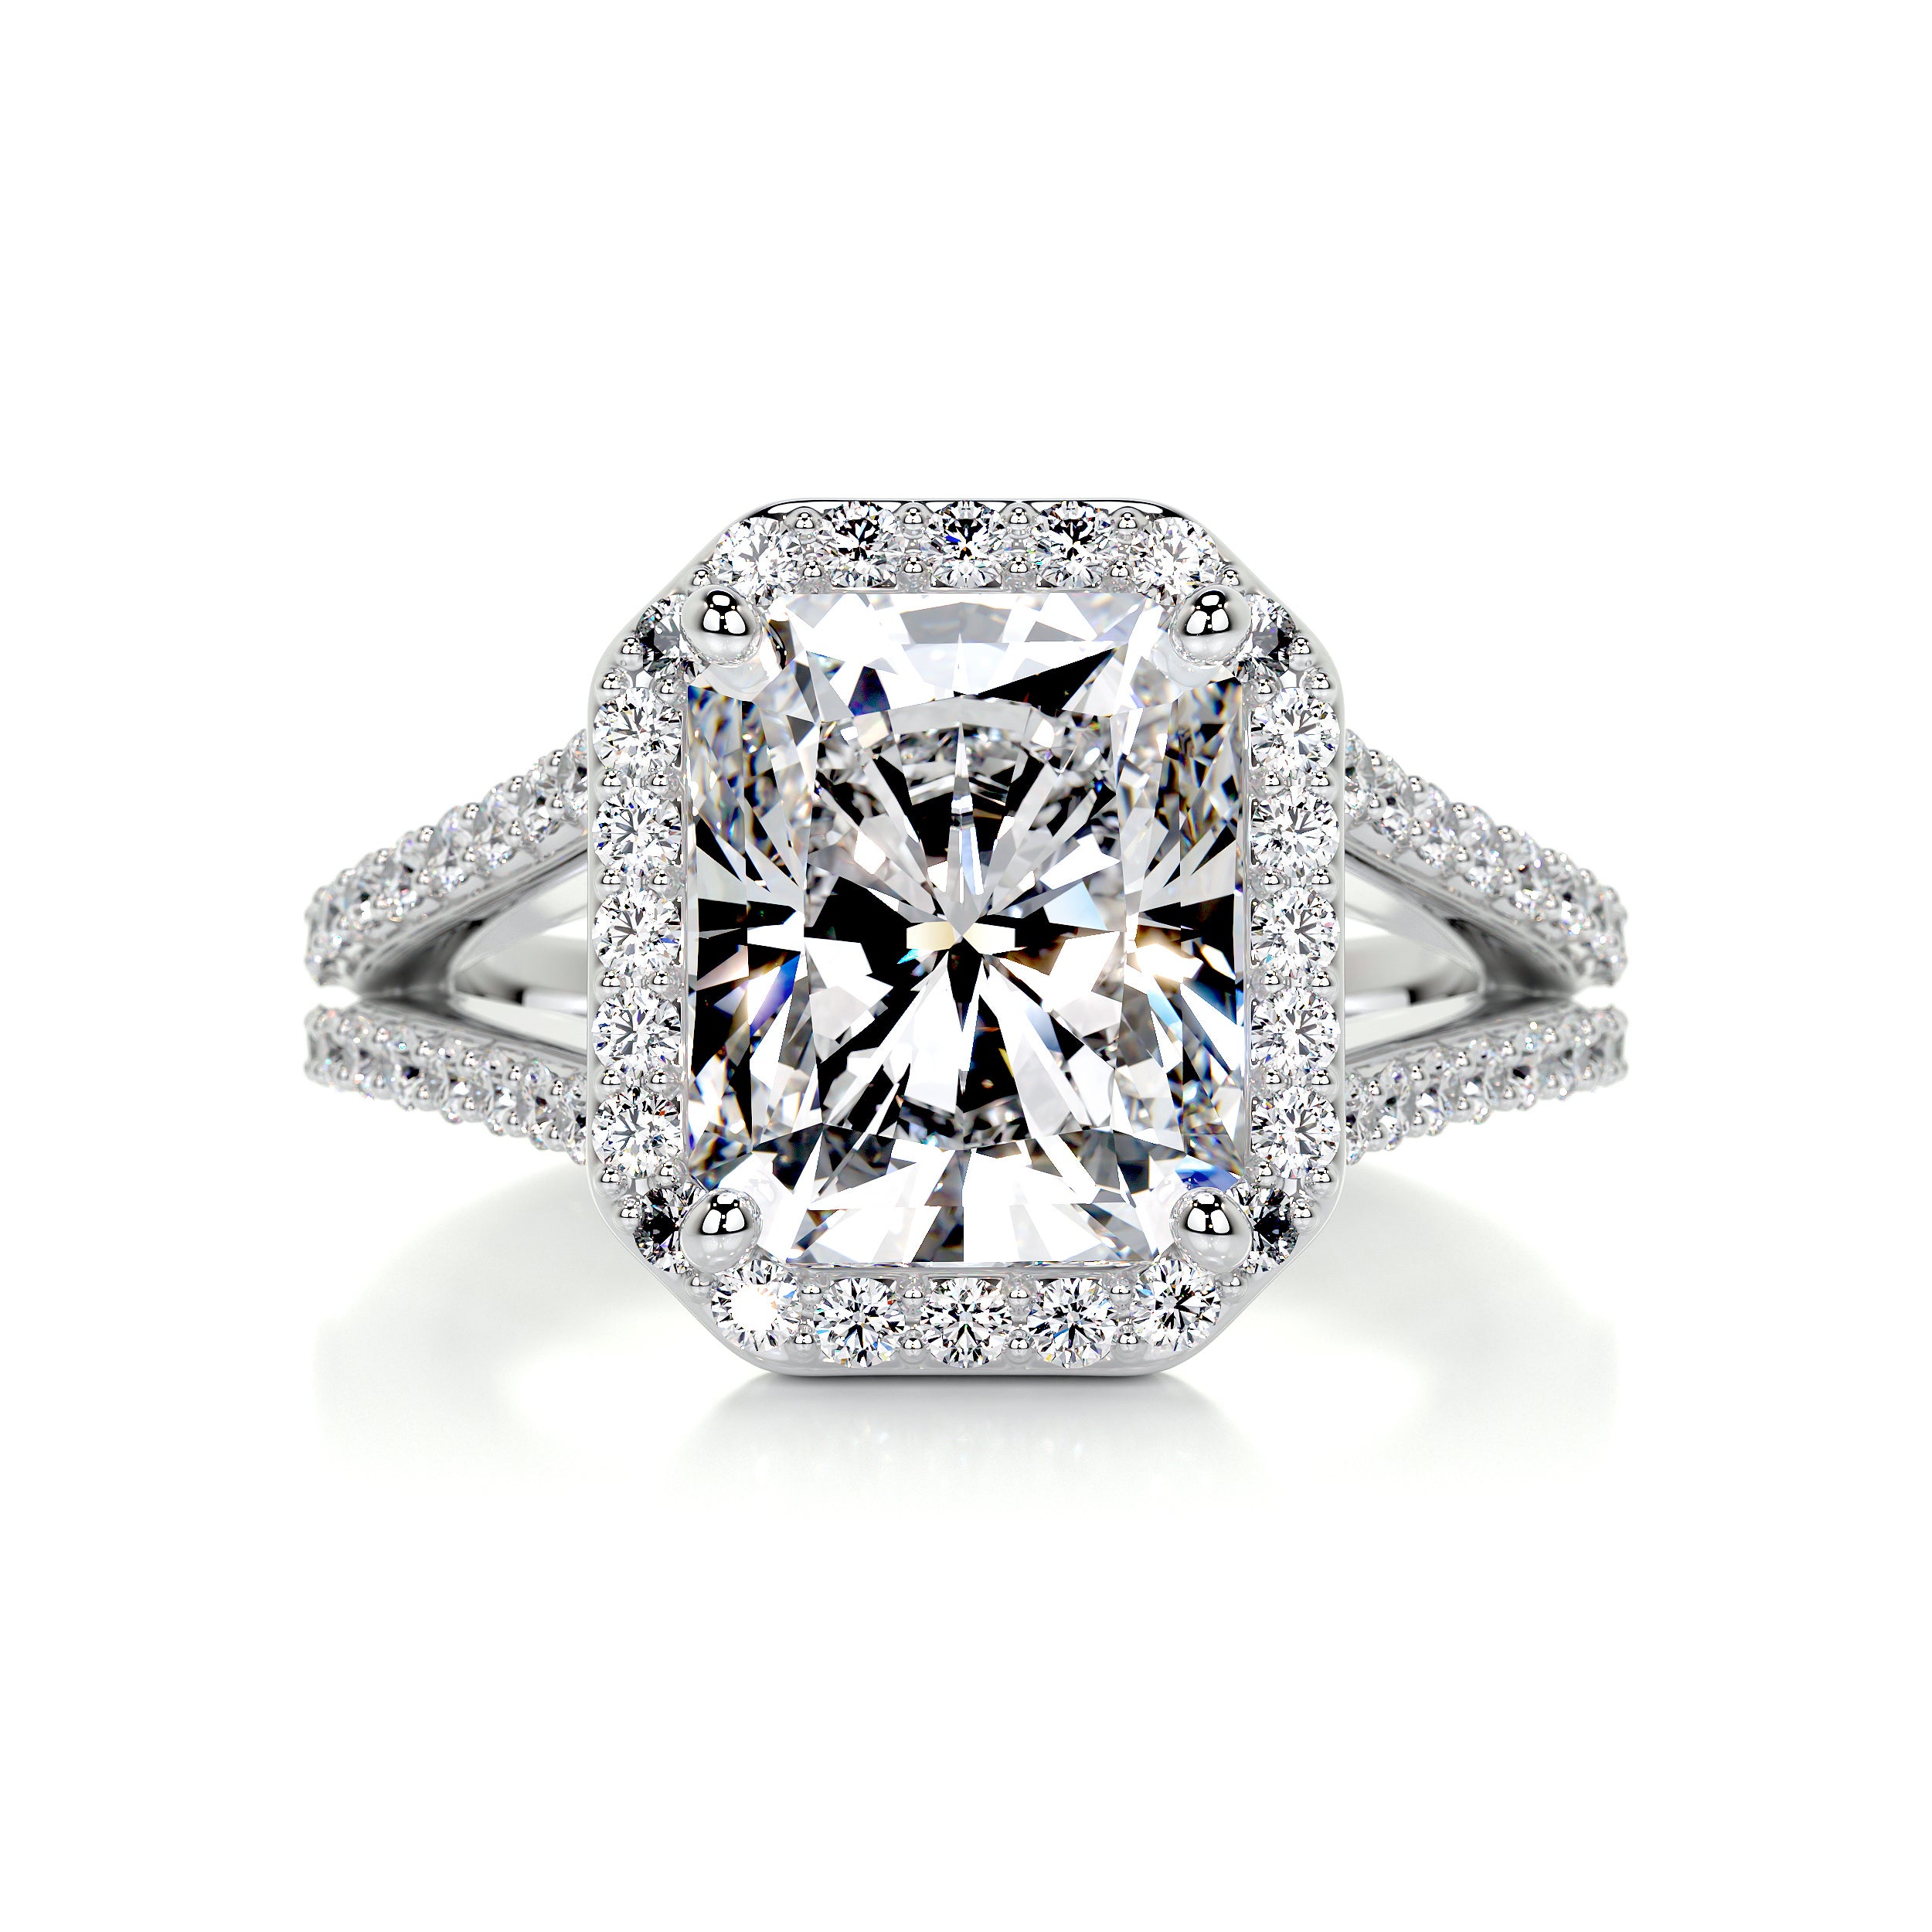 Marina Diamond Engagement Ring   (3.5 Carat) -14K White Gold